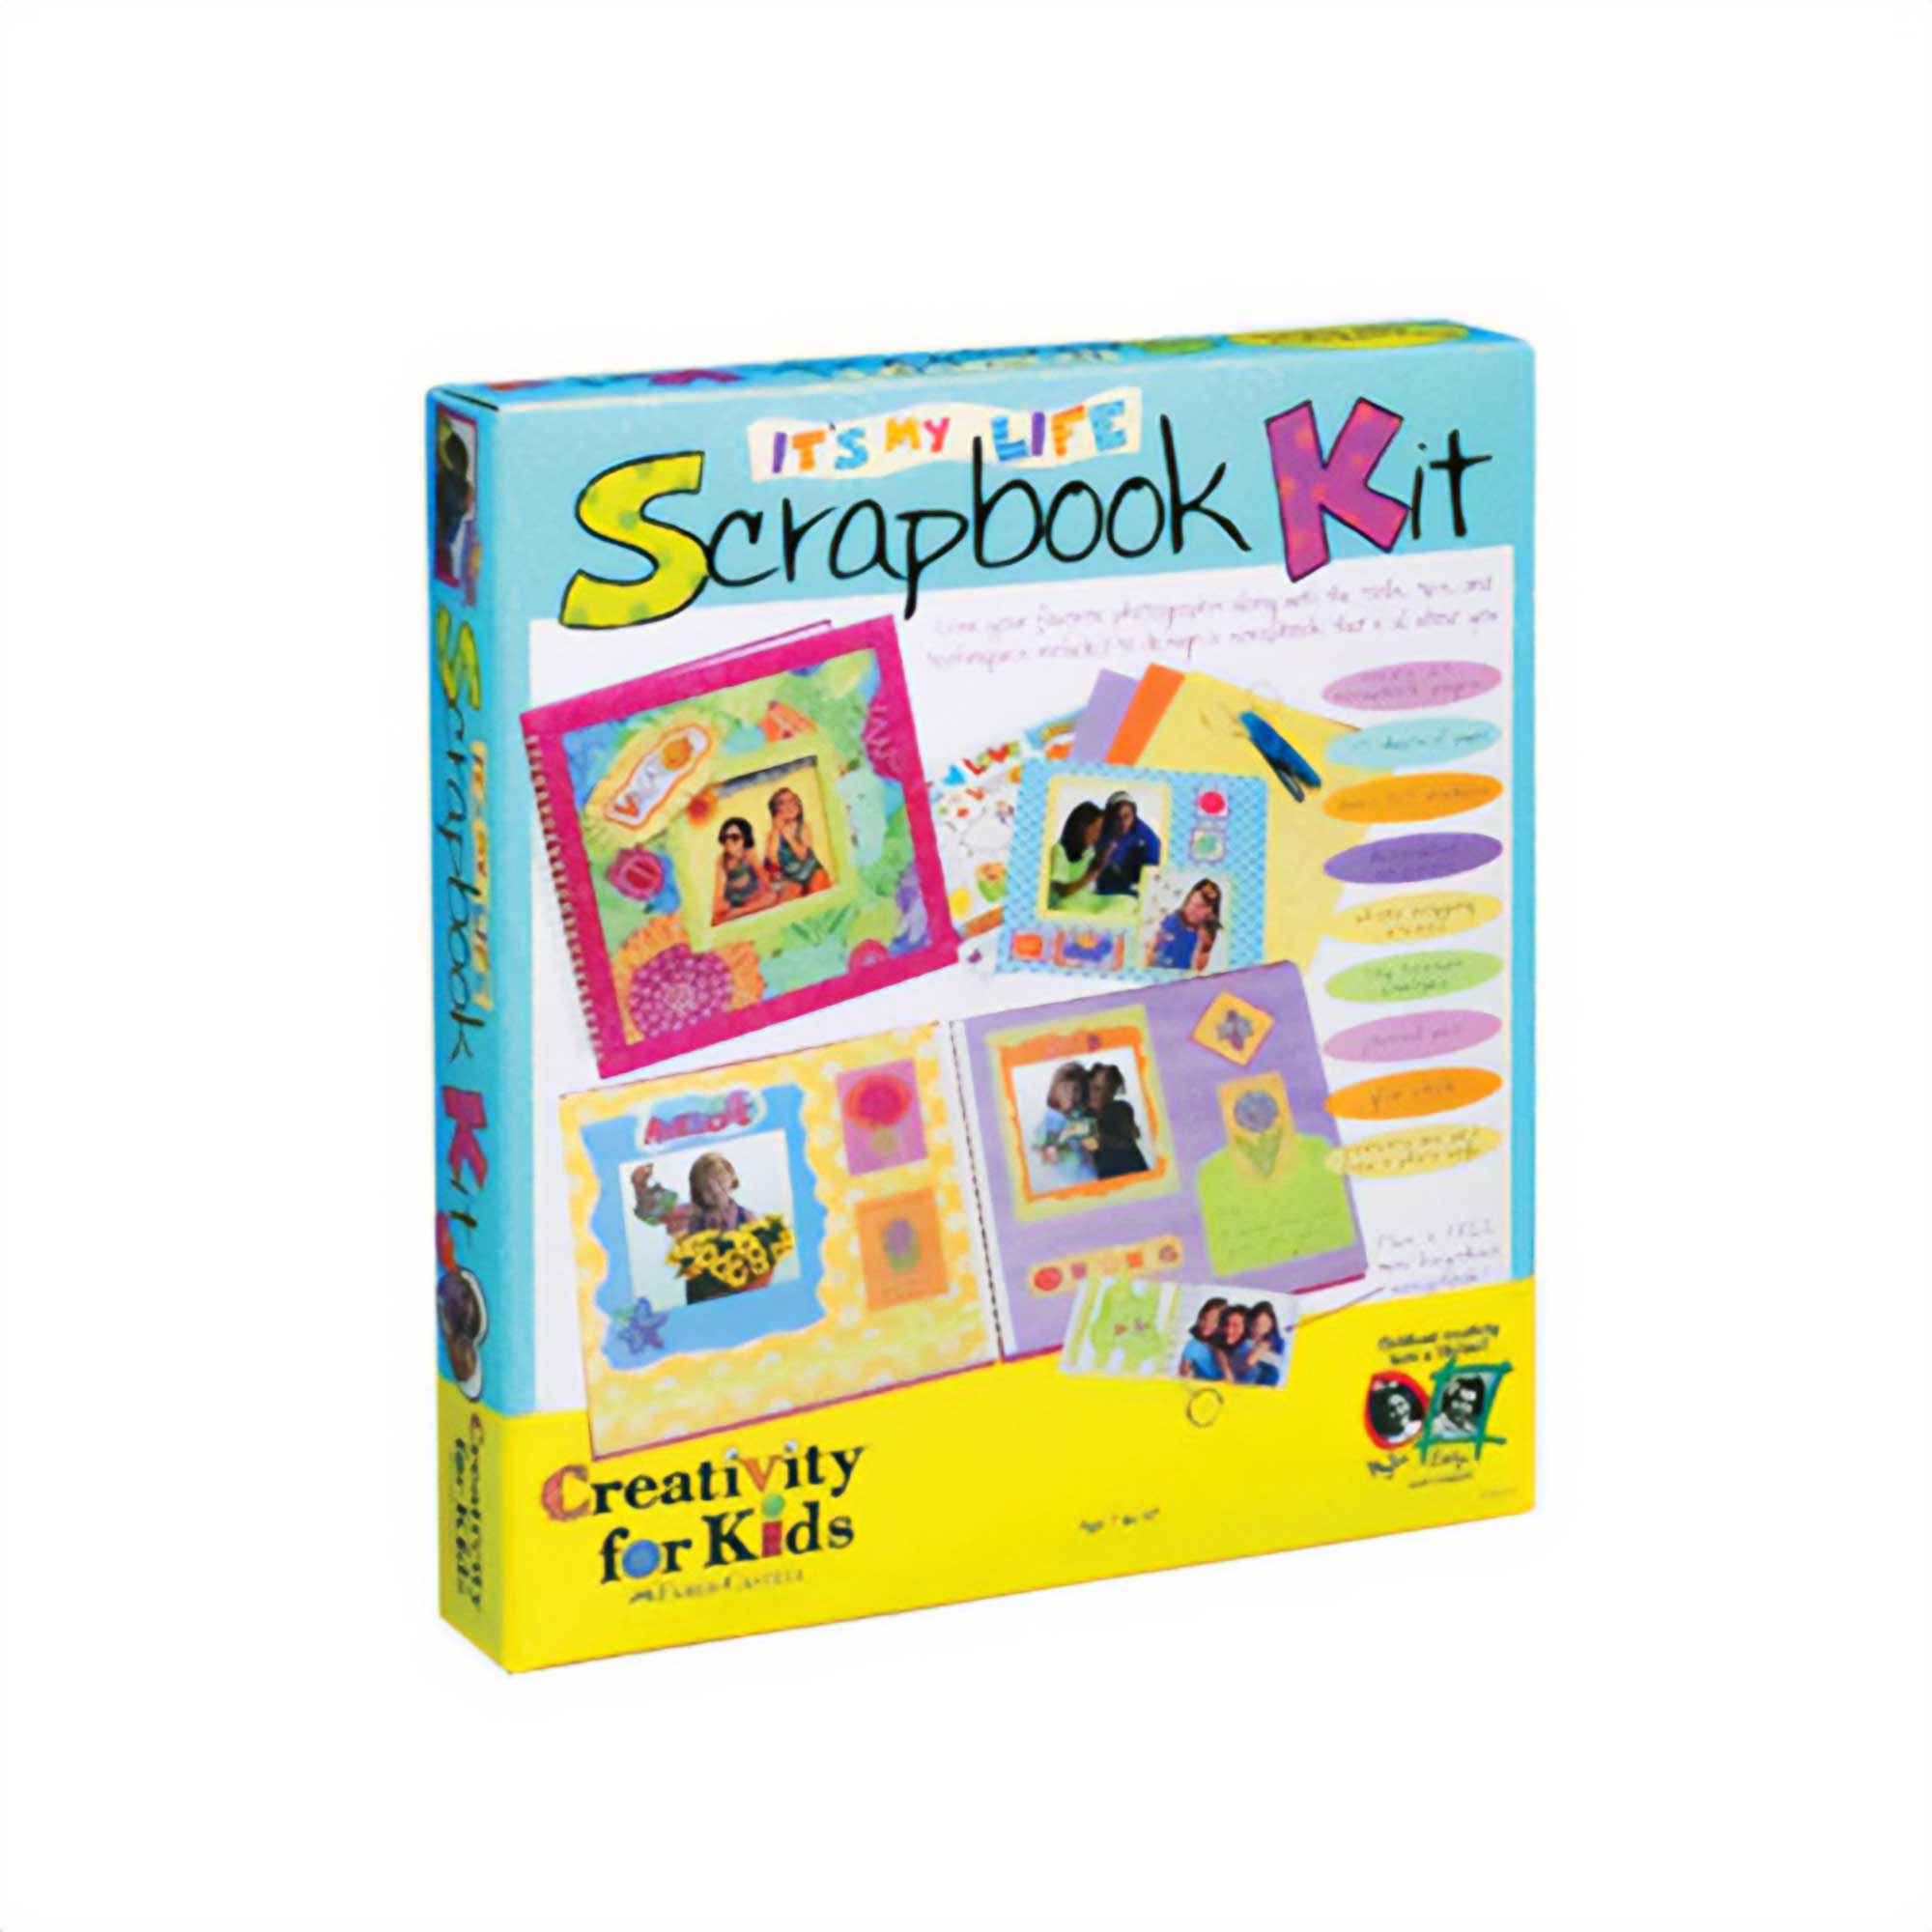 Creativity for Kids - It's my Life Scrapbook Kit